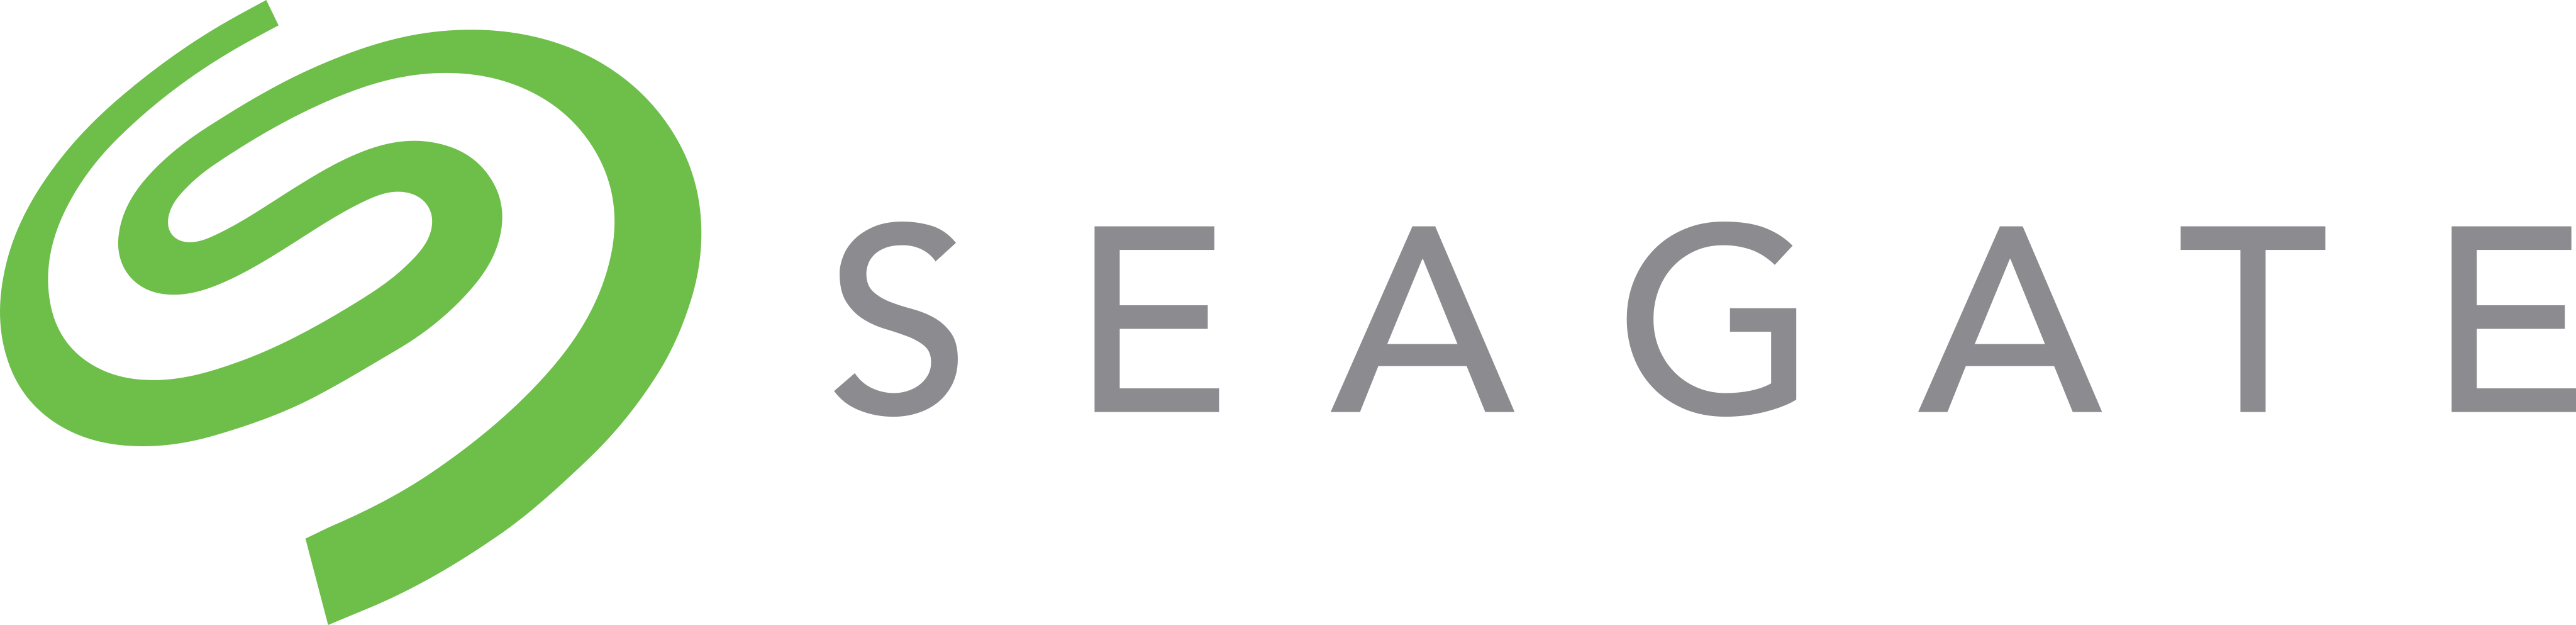 seagate logo 1 - Seagate Logo